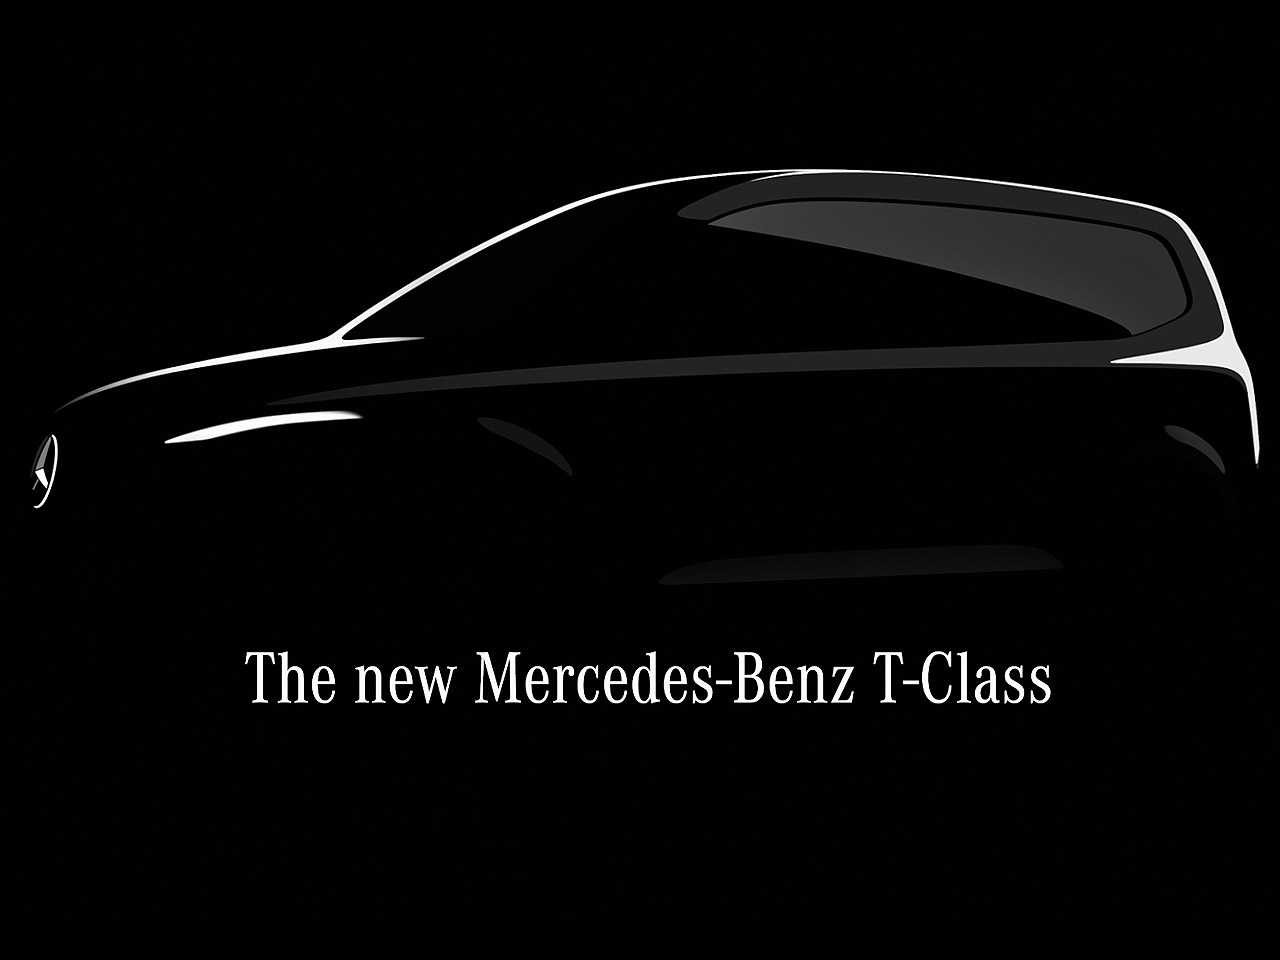 Teaser da Mercedes-Benz confirmando a indita Classe T